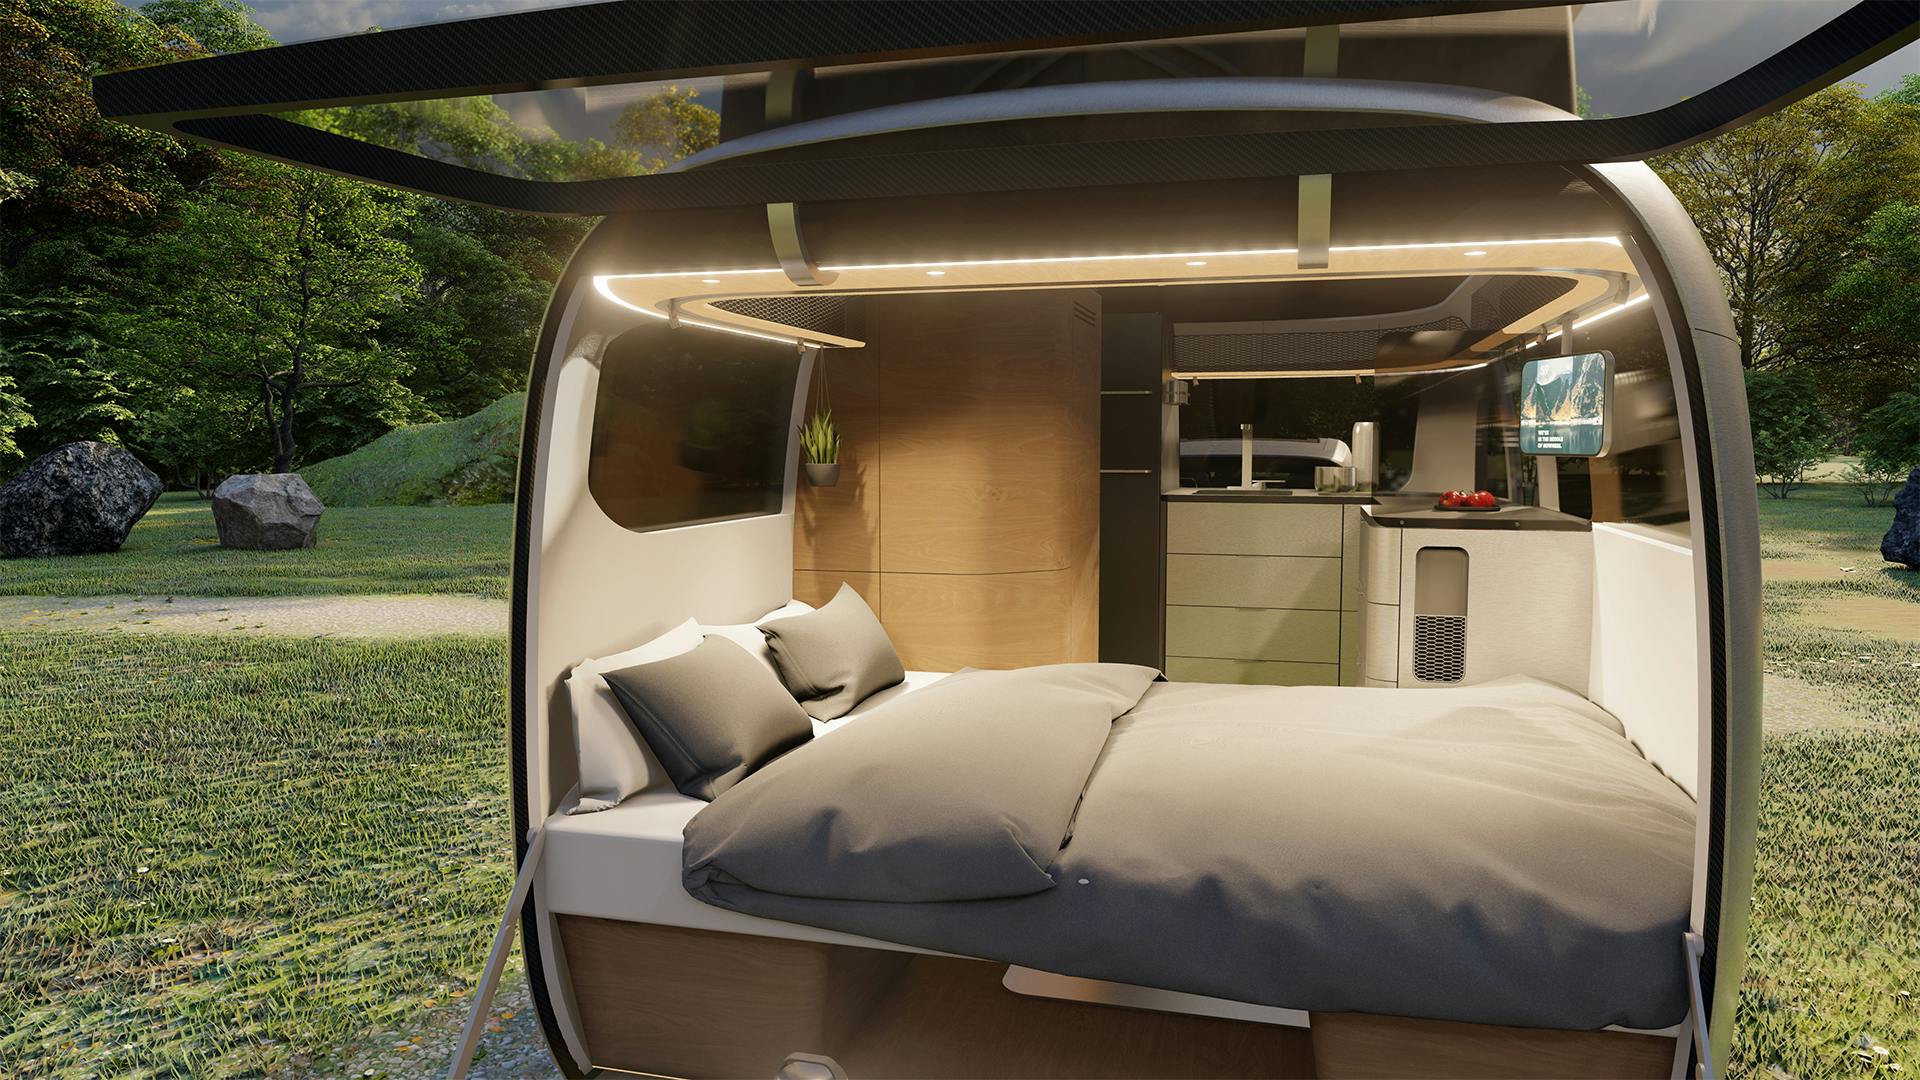 Airstream Porsche camper trailer interior rear sleeping area